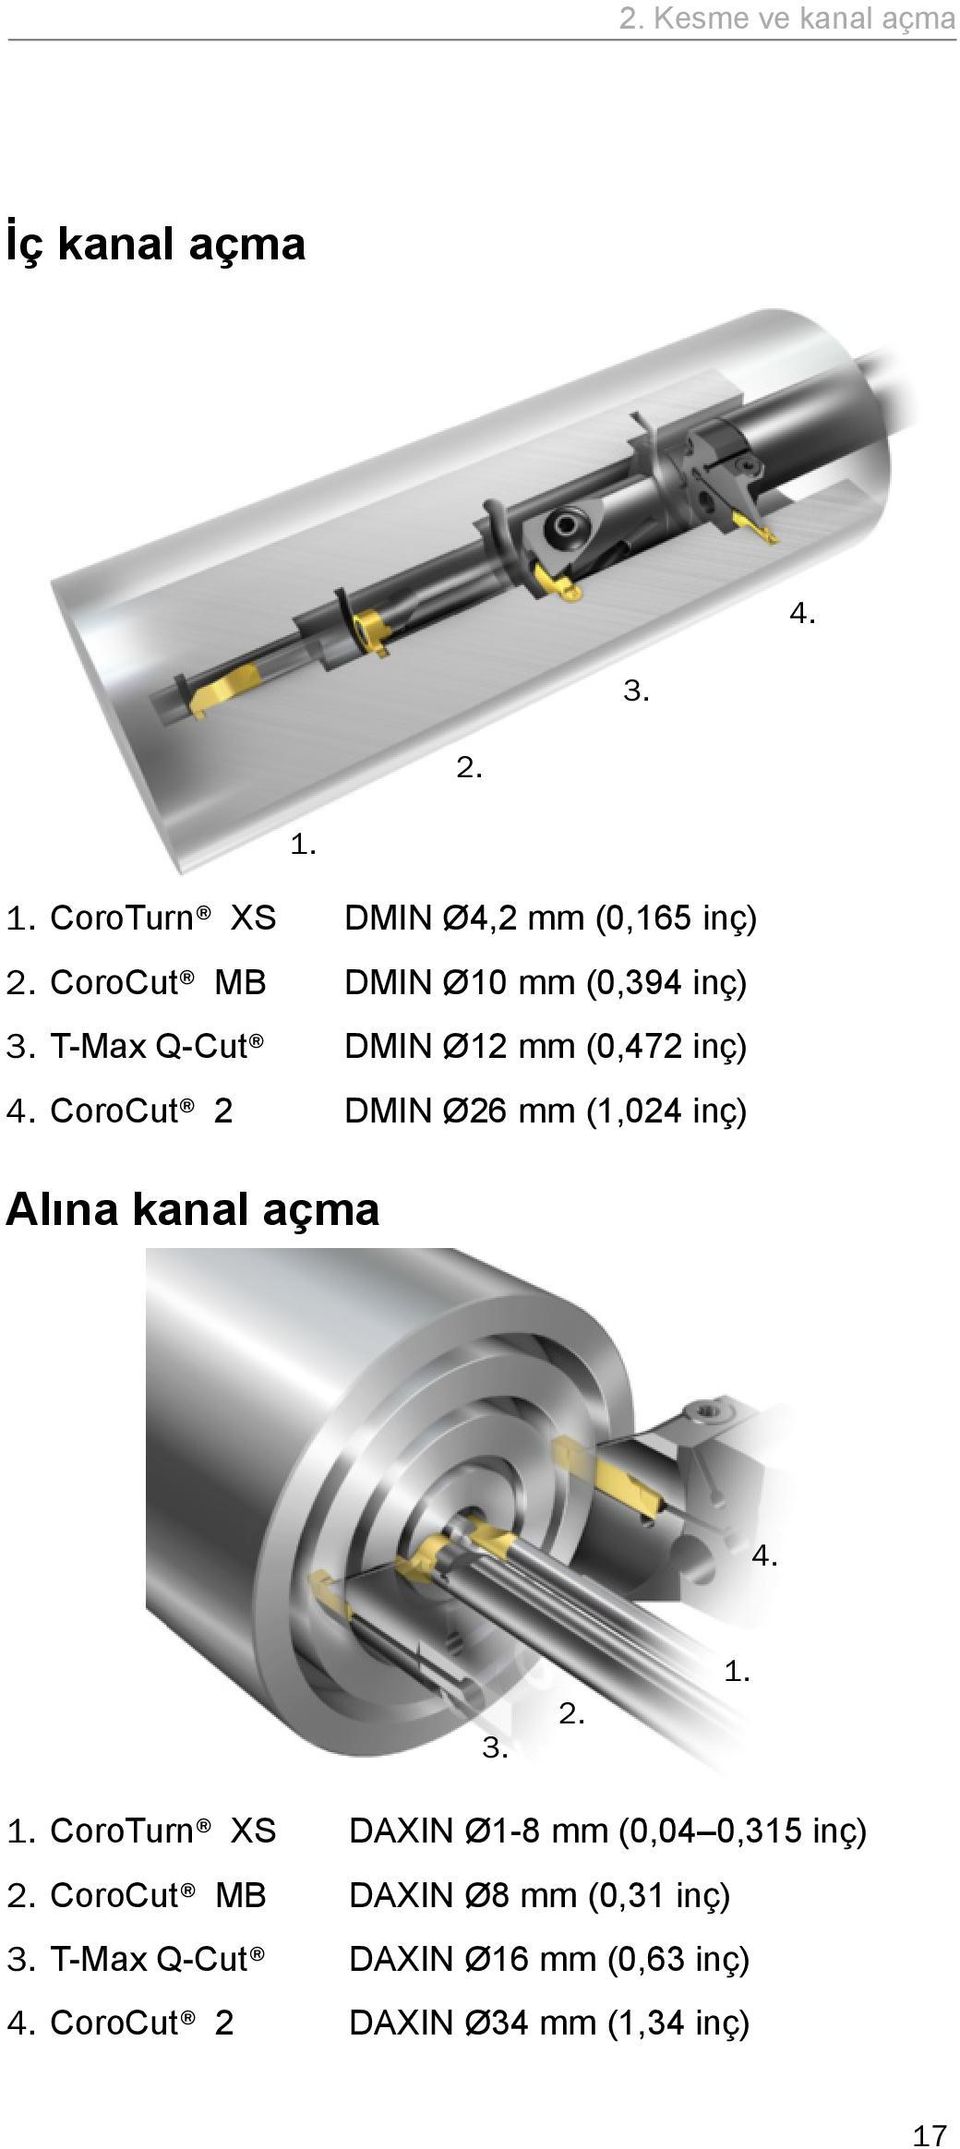 CoroCut 2 DMIN Ø26 mm (1,024 inç) Alına kanal açma 4. 3. 2. 1.